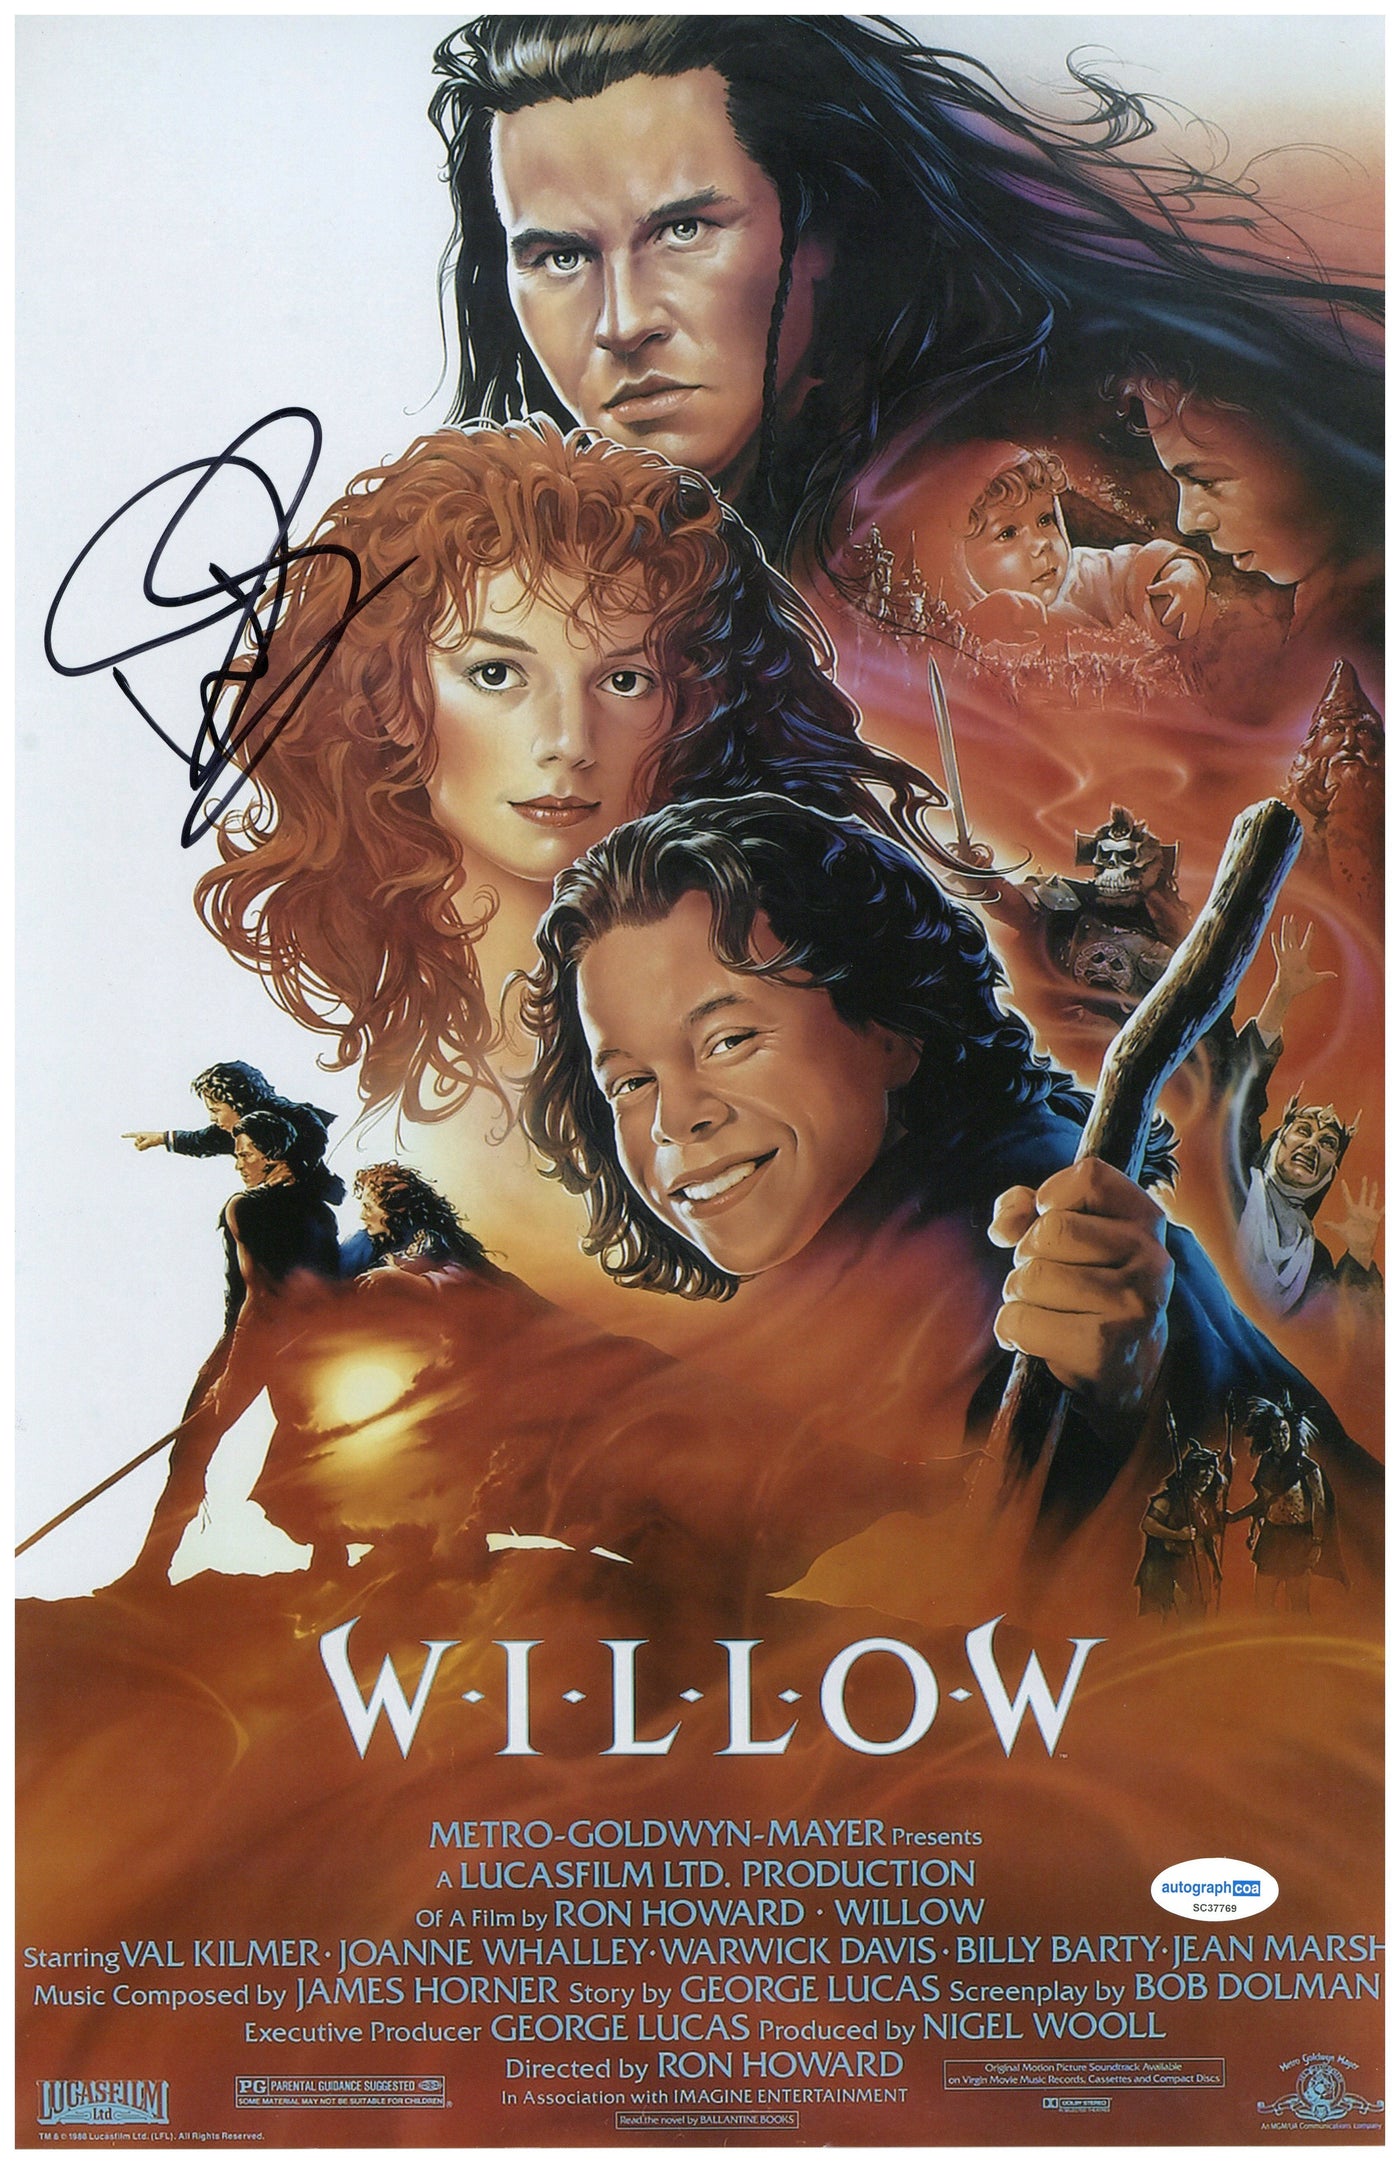 Warwick Davis Signed 11x17 Photo Willow Autographed AutographCOA